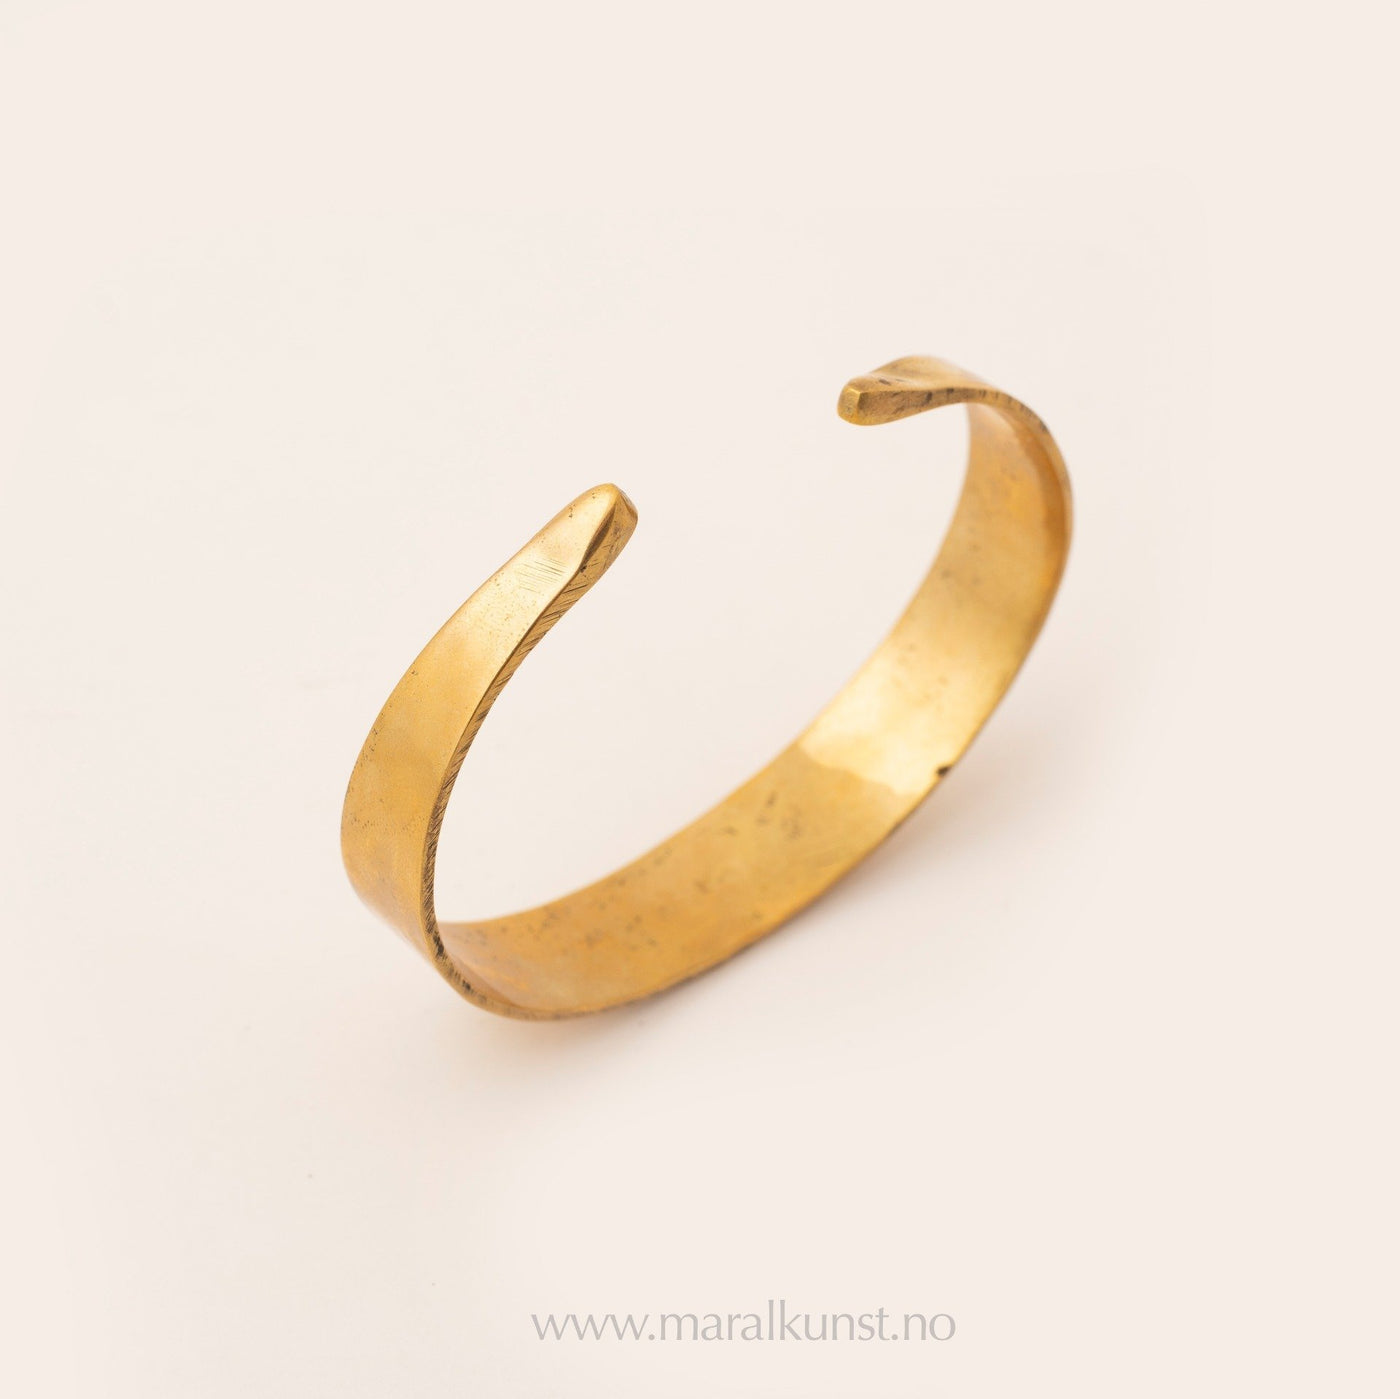 Indian hammered brass Cuff Bracelet - Maral Kunst Jewelry